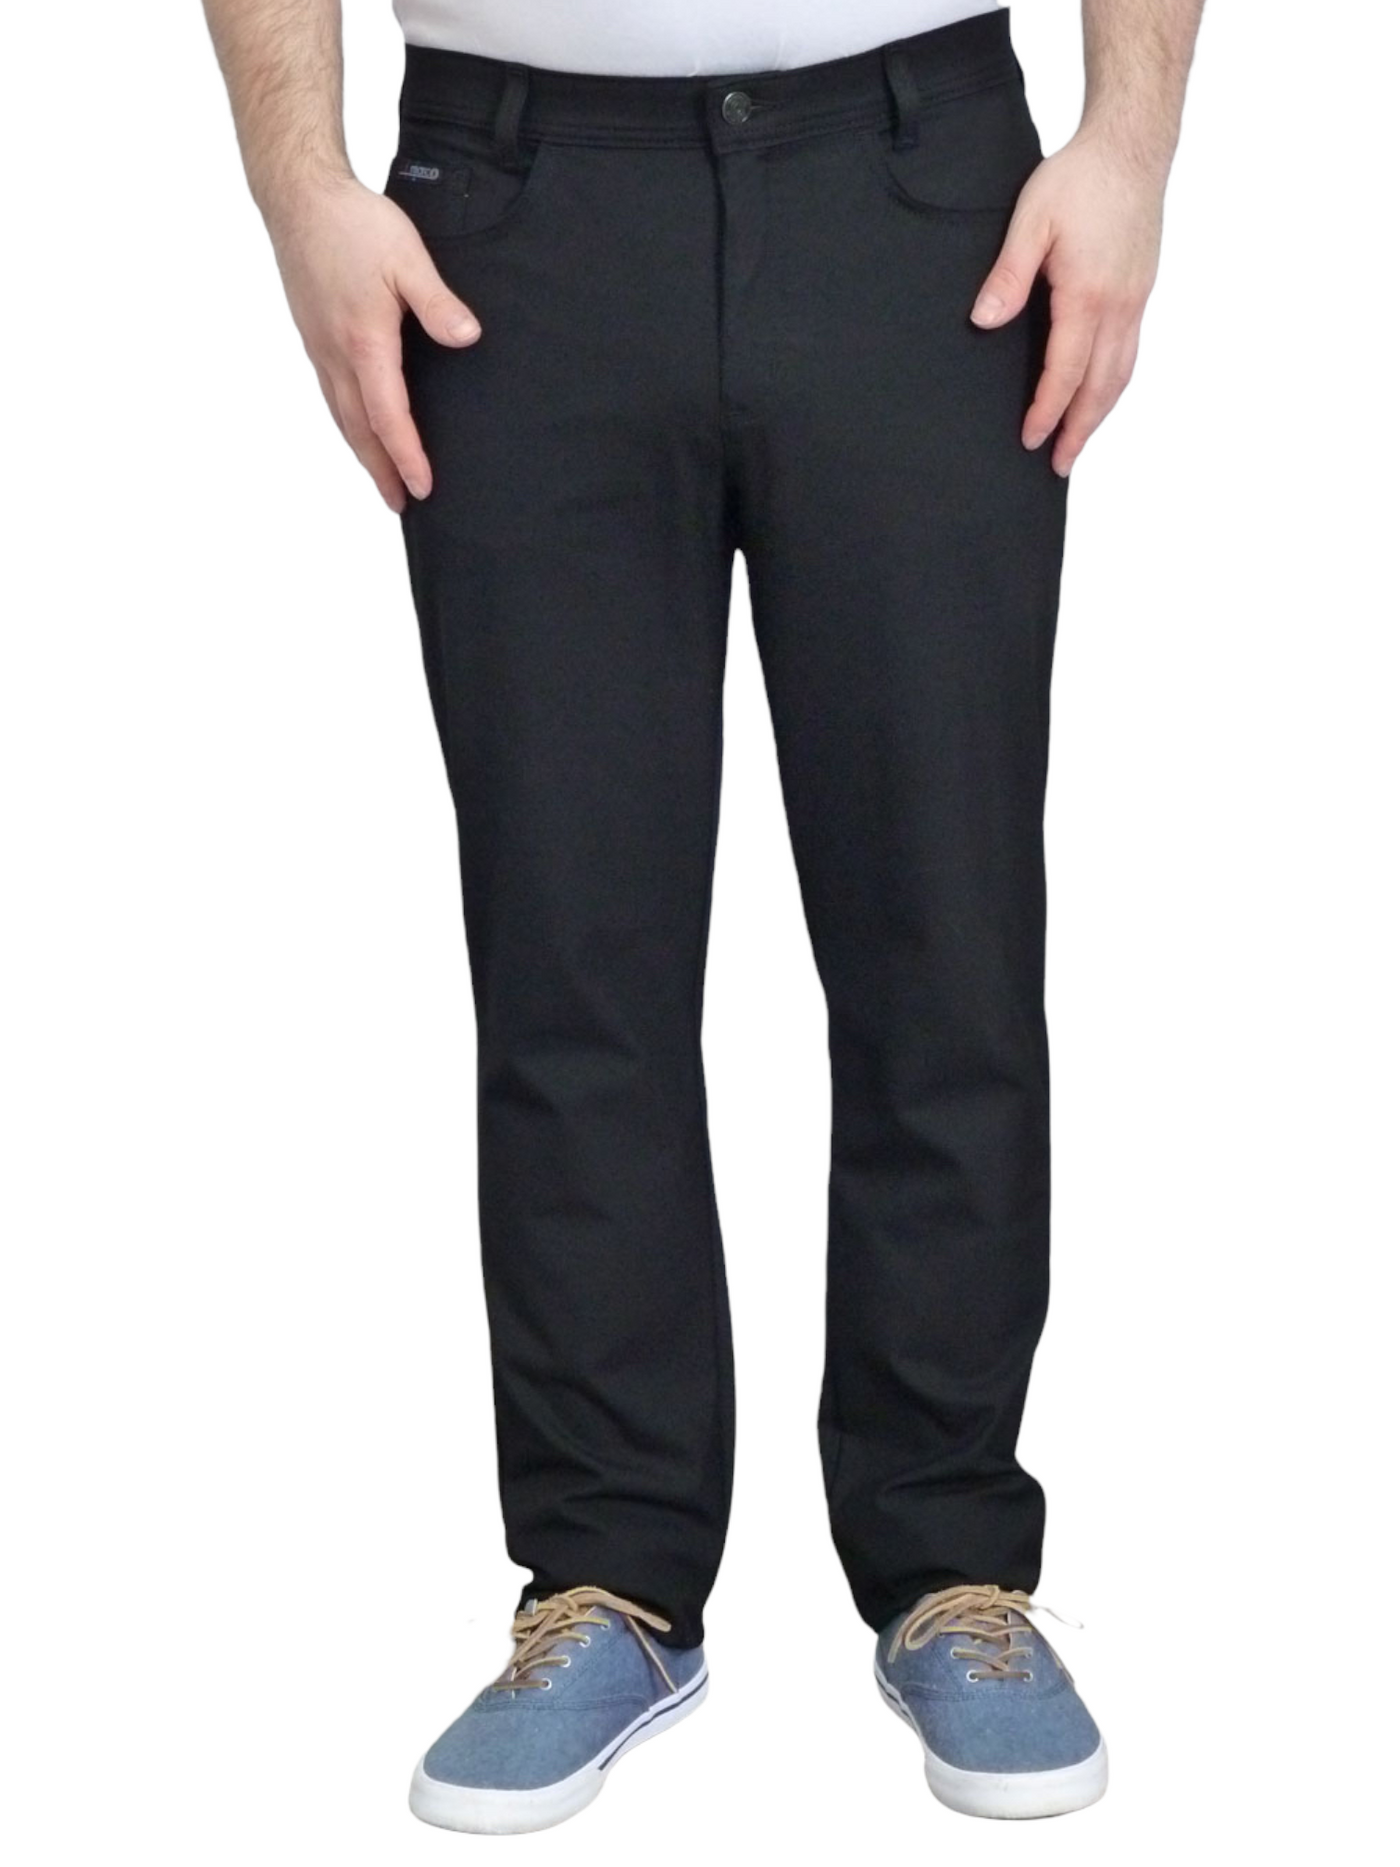 Pantalon noir extensible Maxi